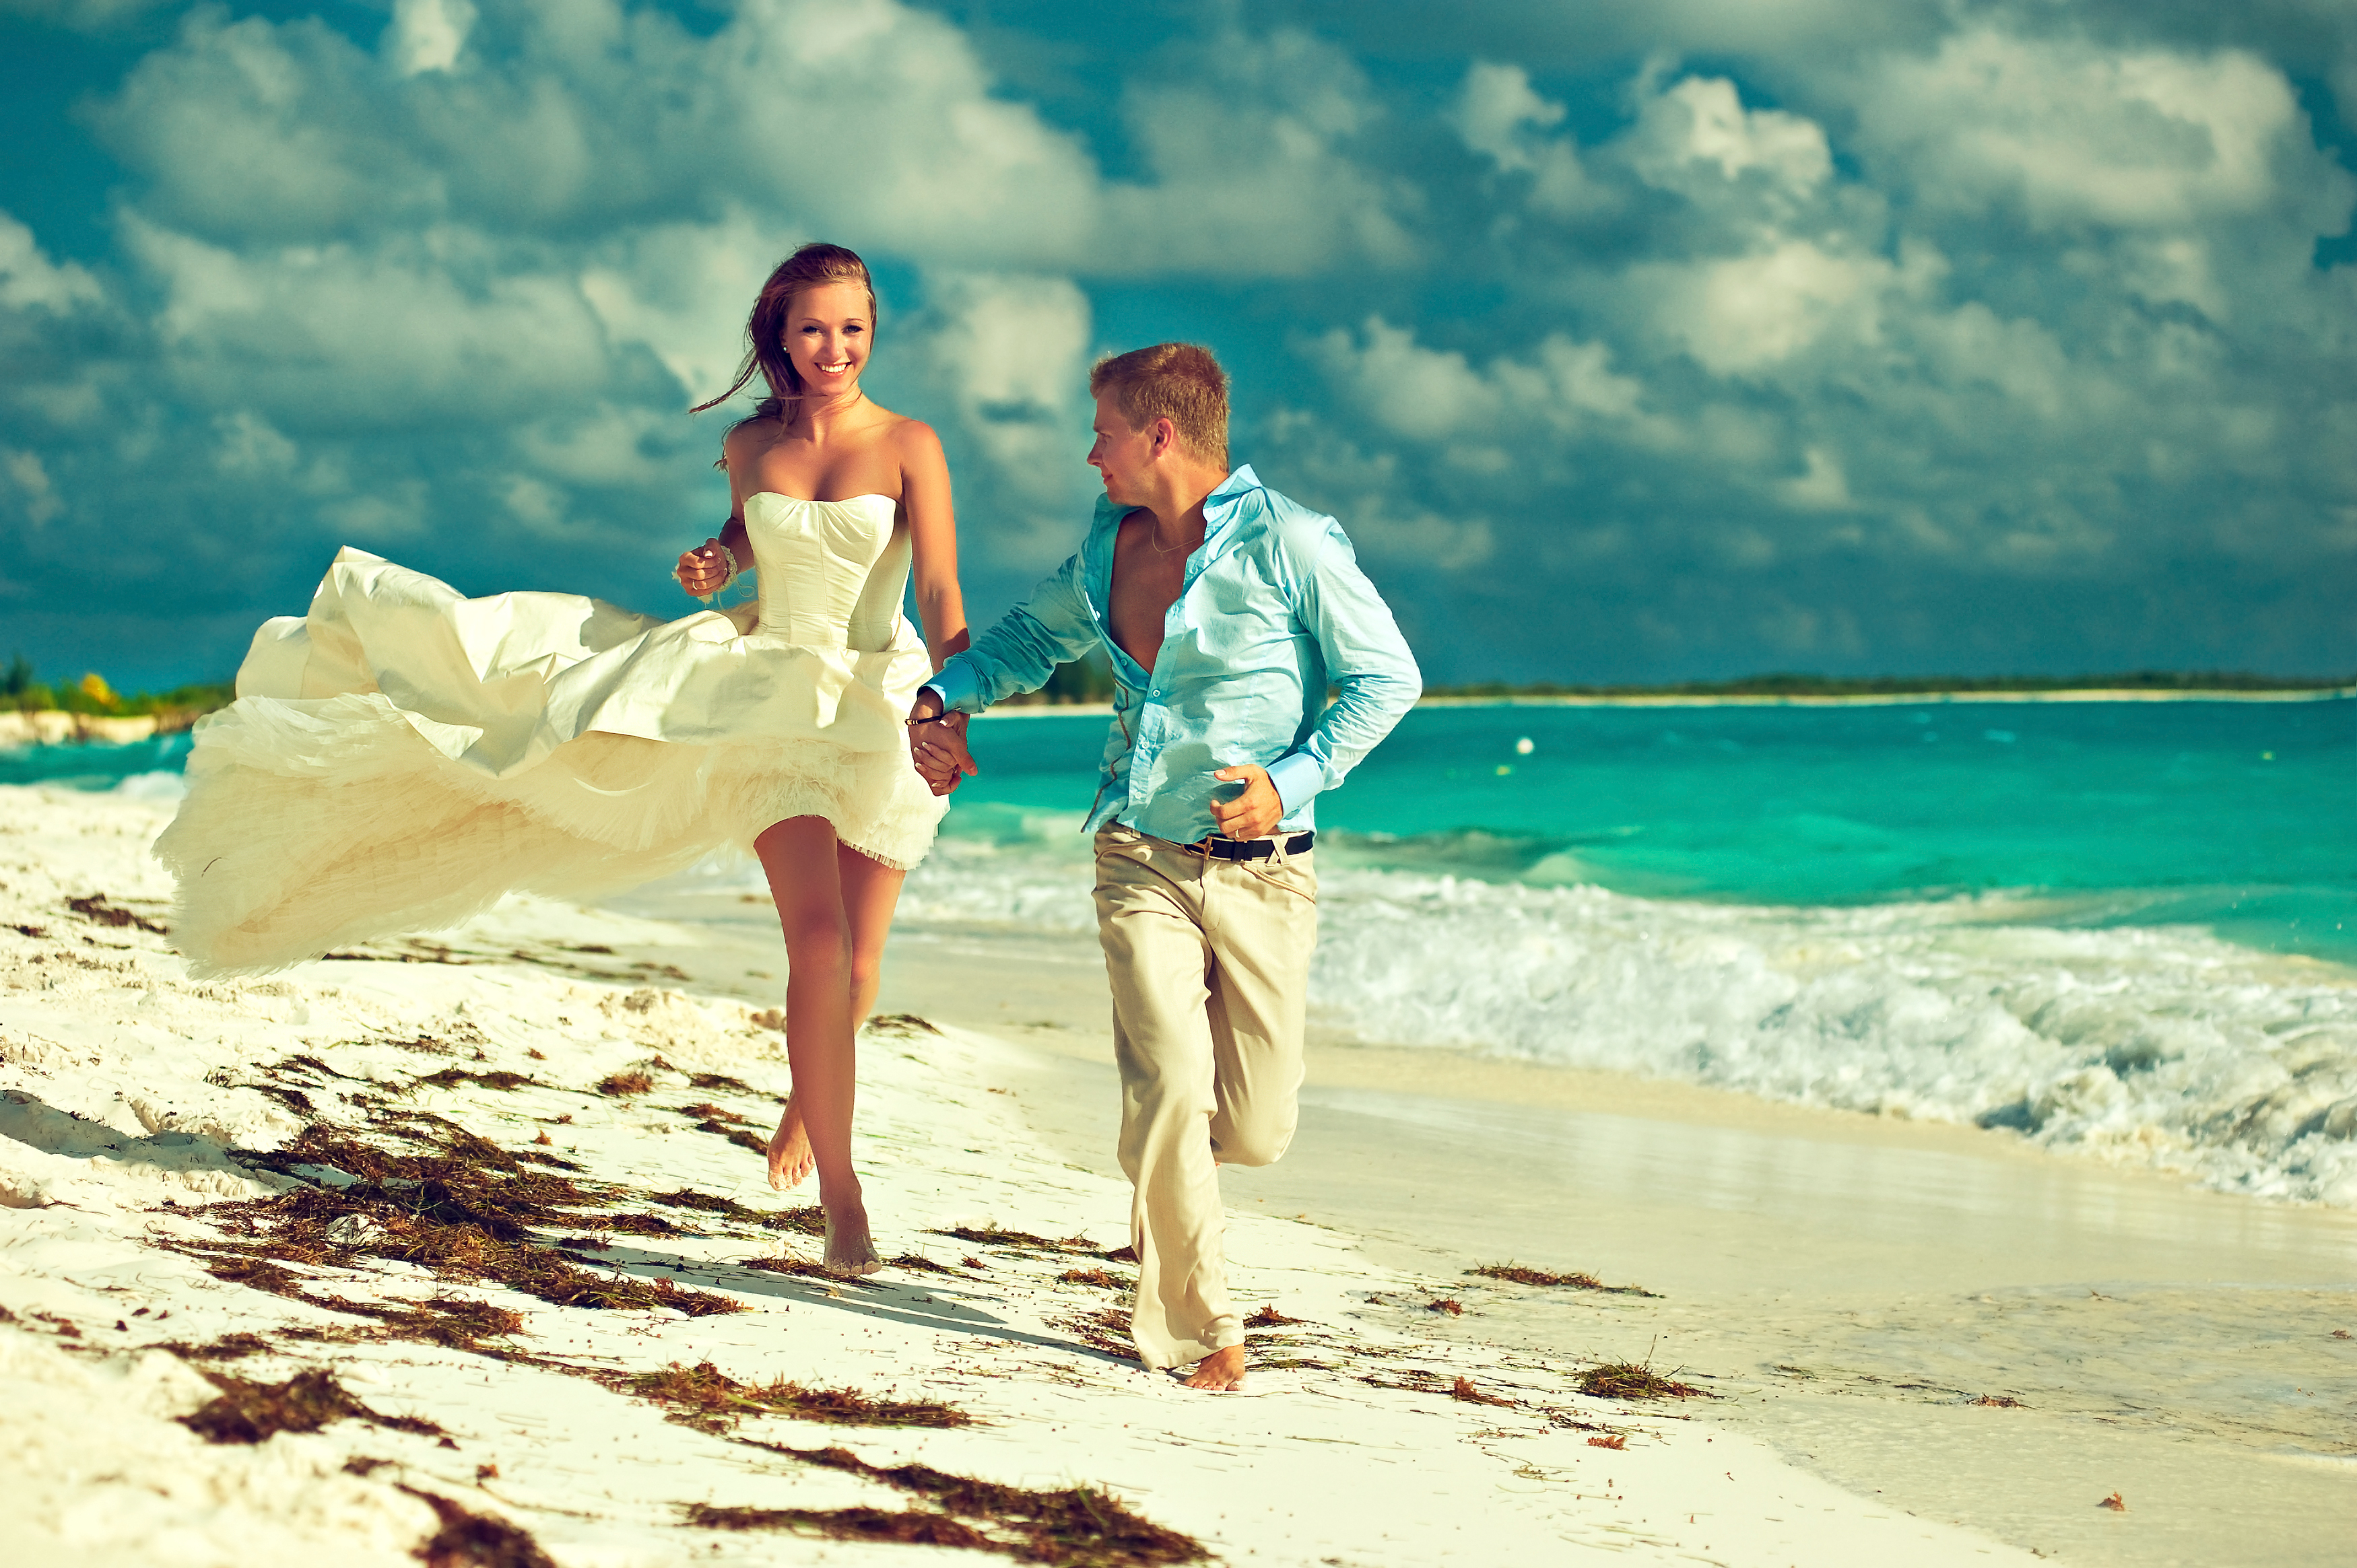 Поехали с мужем на море. Свадьба на море. Свадебная фотосессия на берегу моря. Фотосессия на море с мужем. Мужчина и женщина на море.